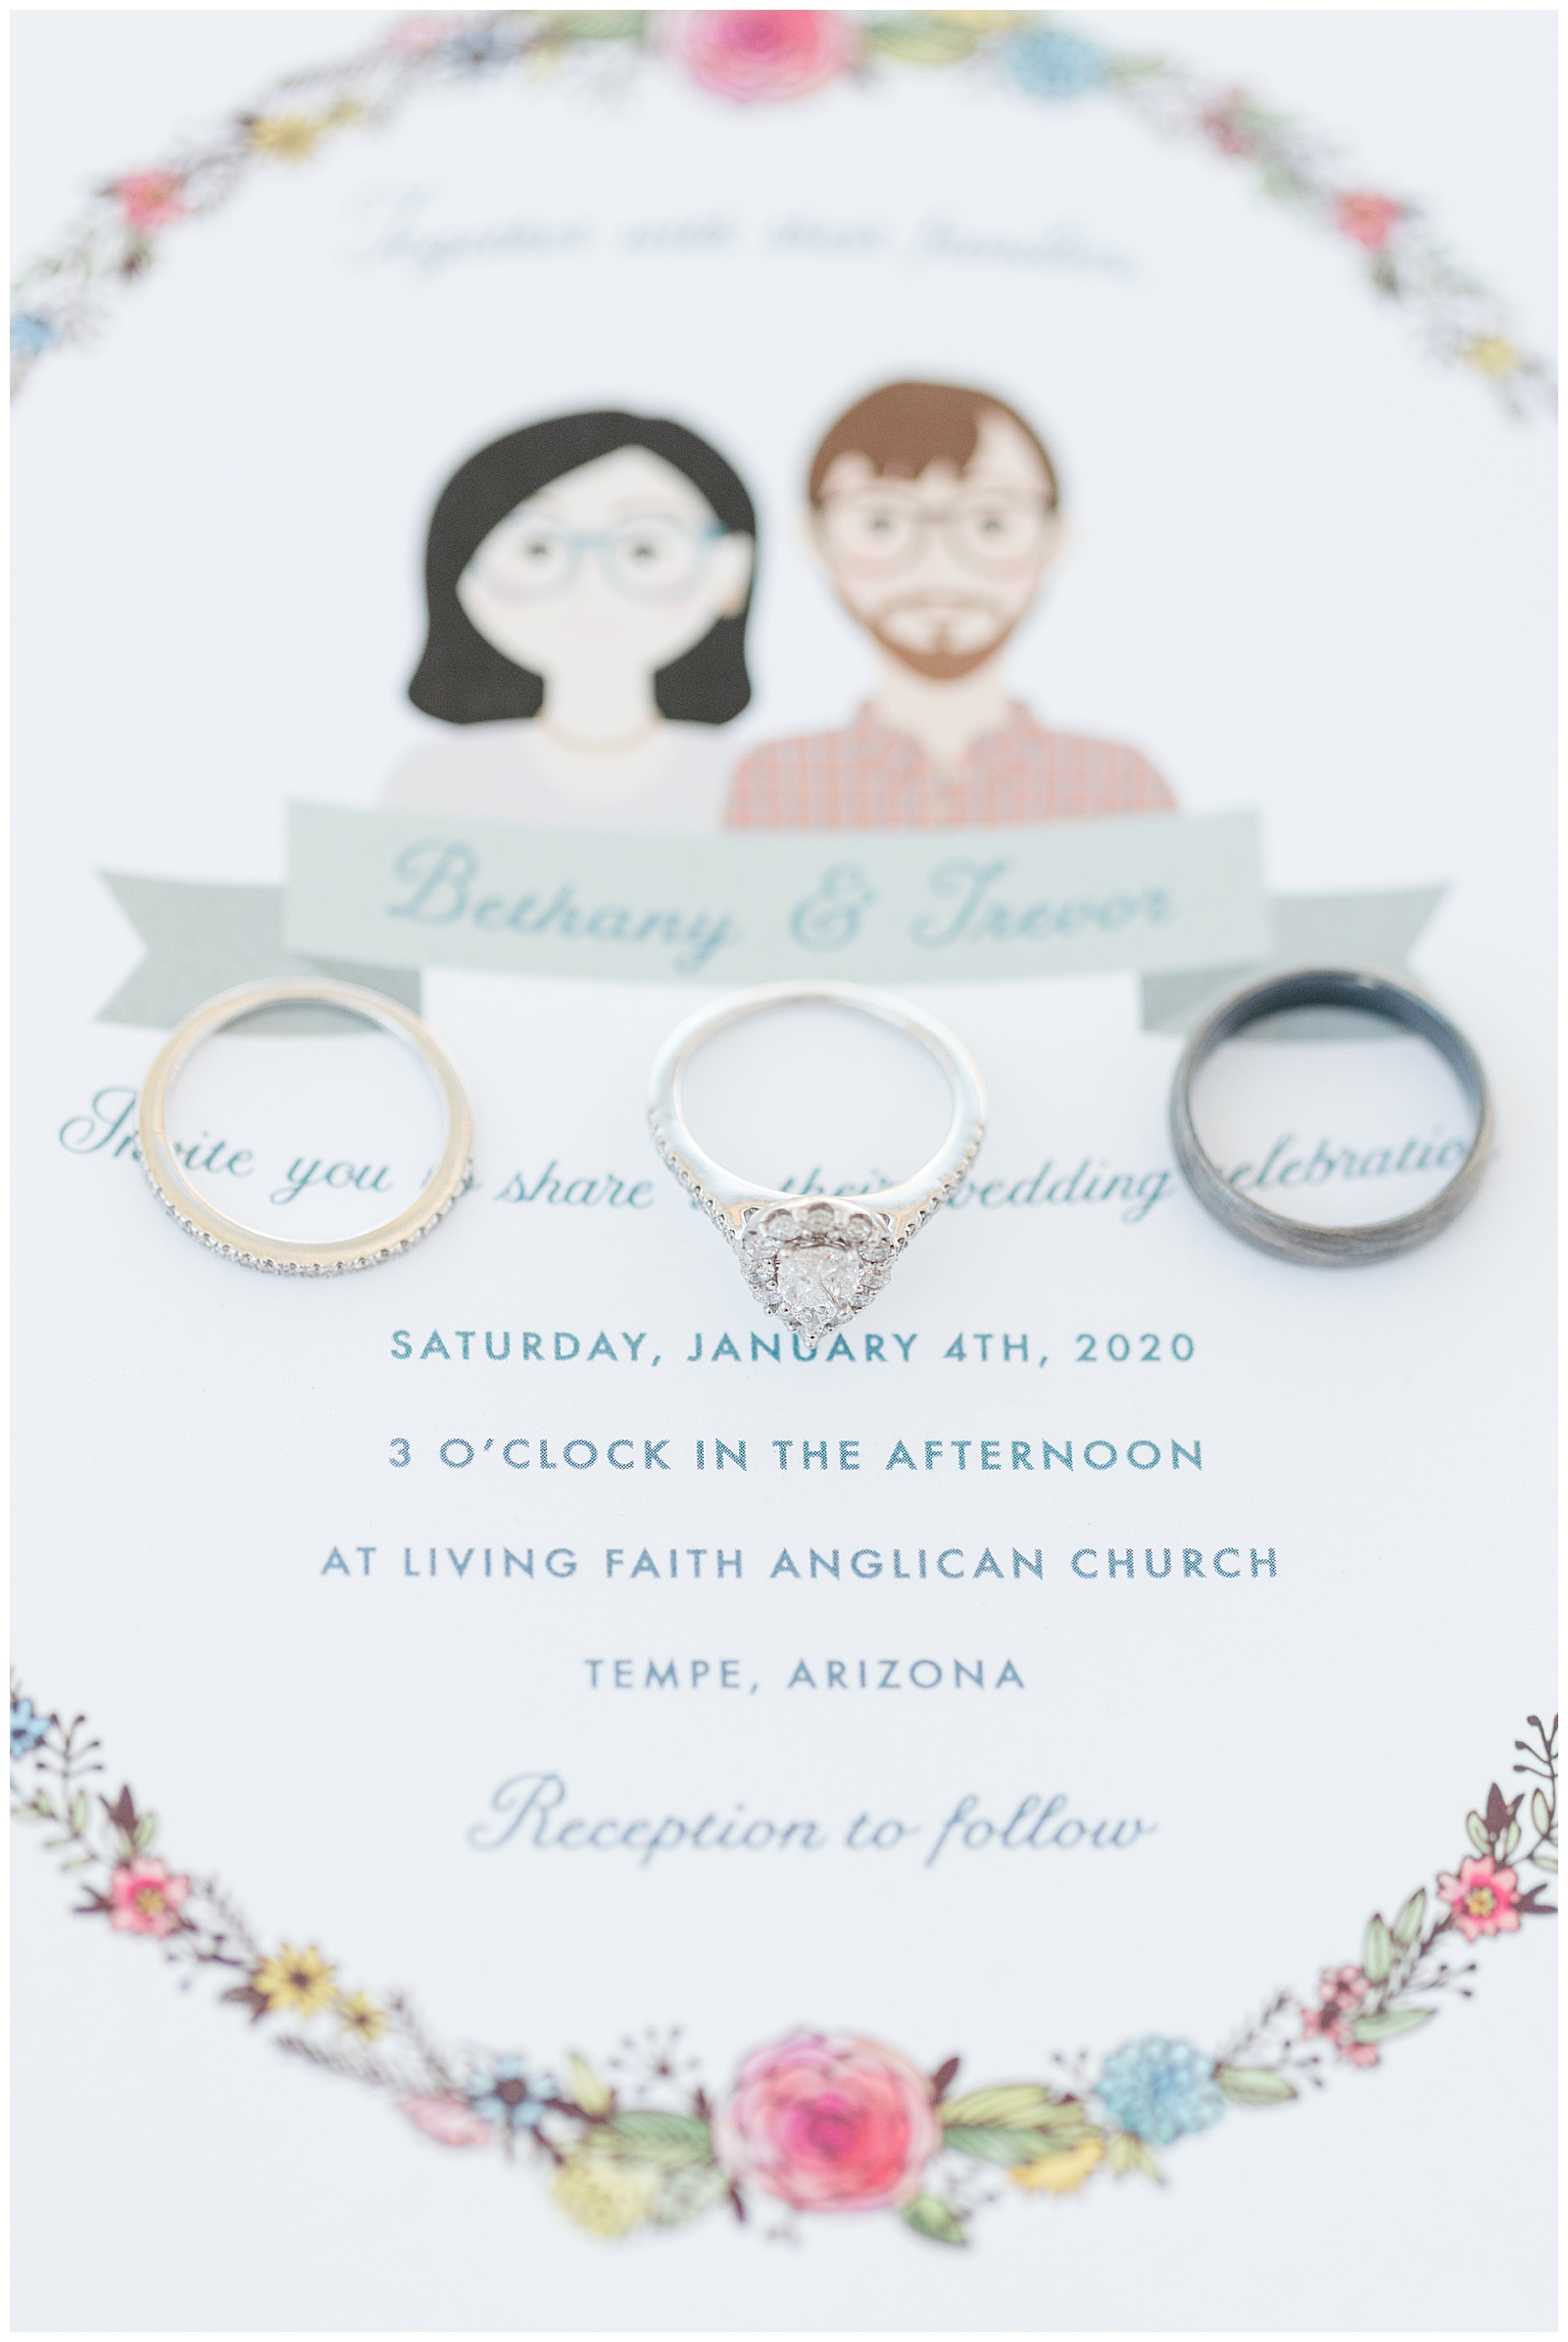 Phoenix wedding photographer shows wedding rings atop an invitation.